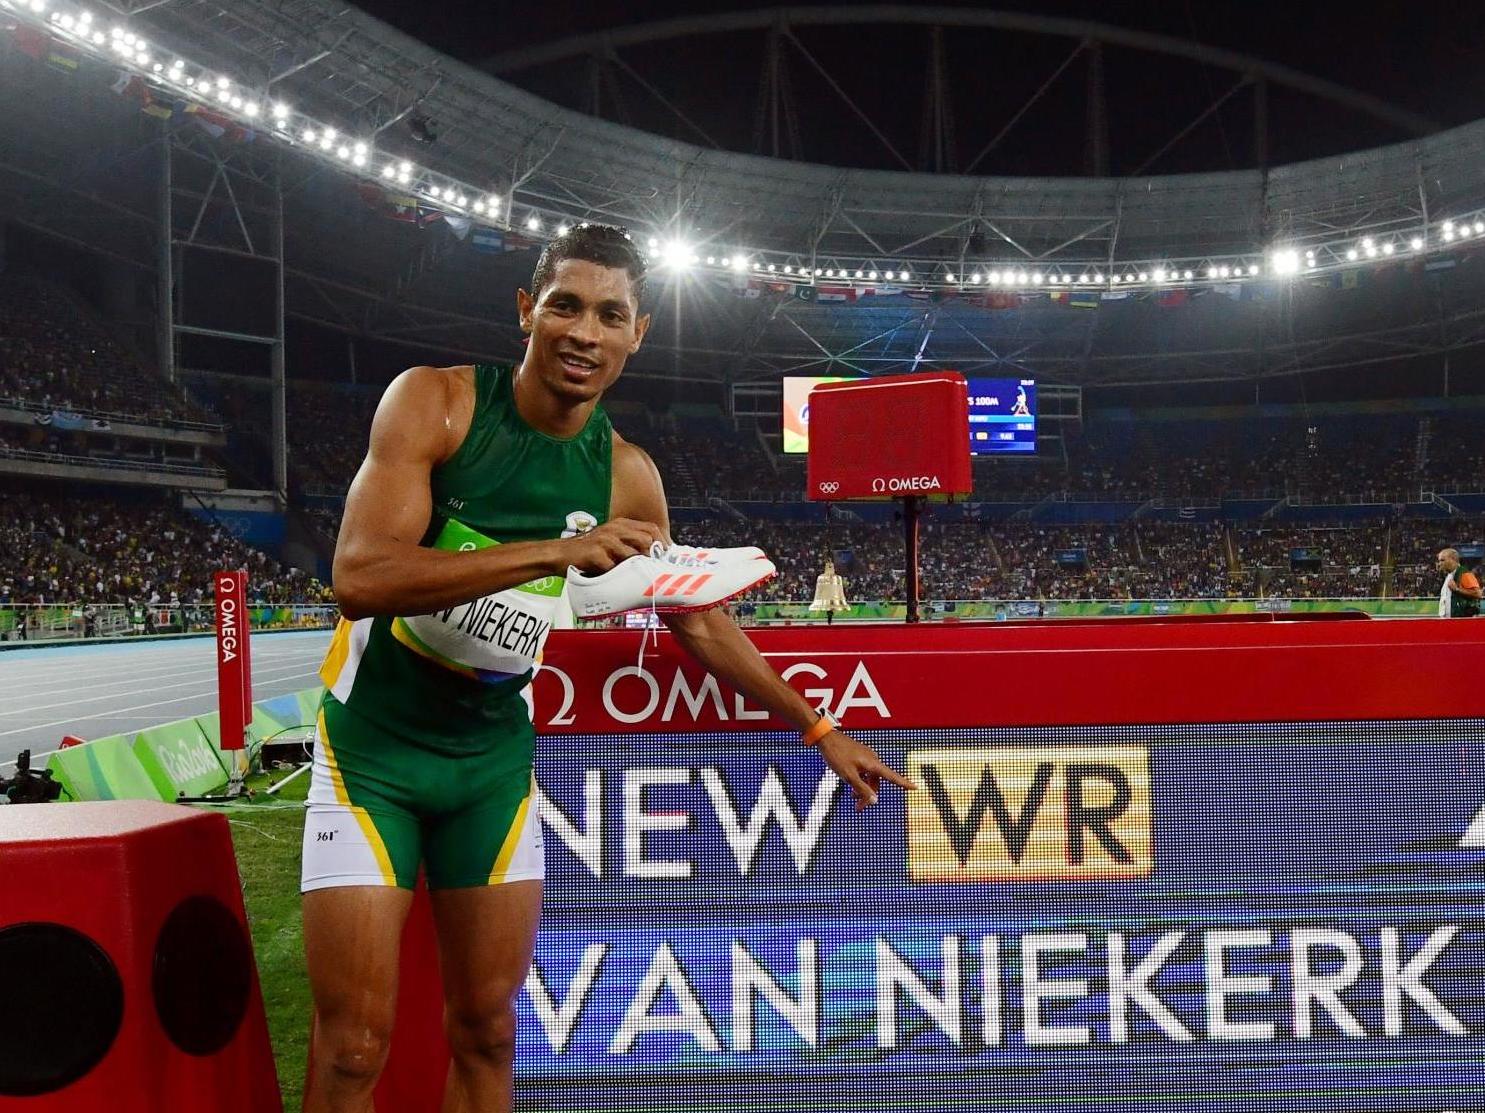 Wayde van Niekerk set the 400m world record at the 2016 Olympics